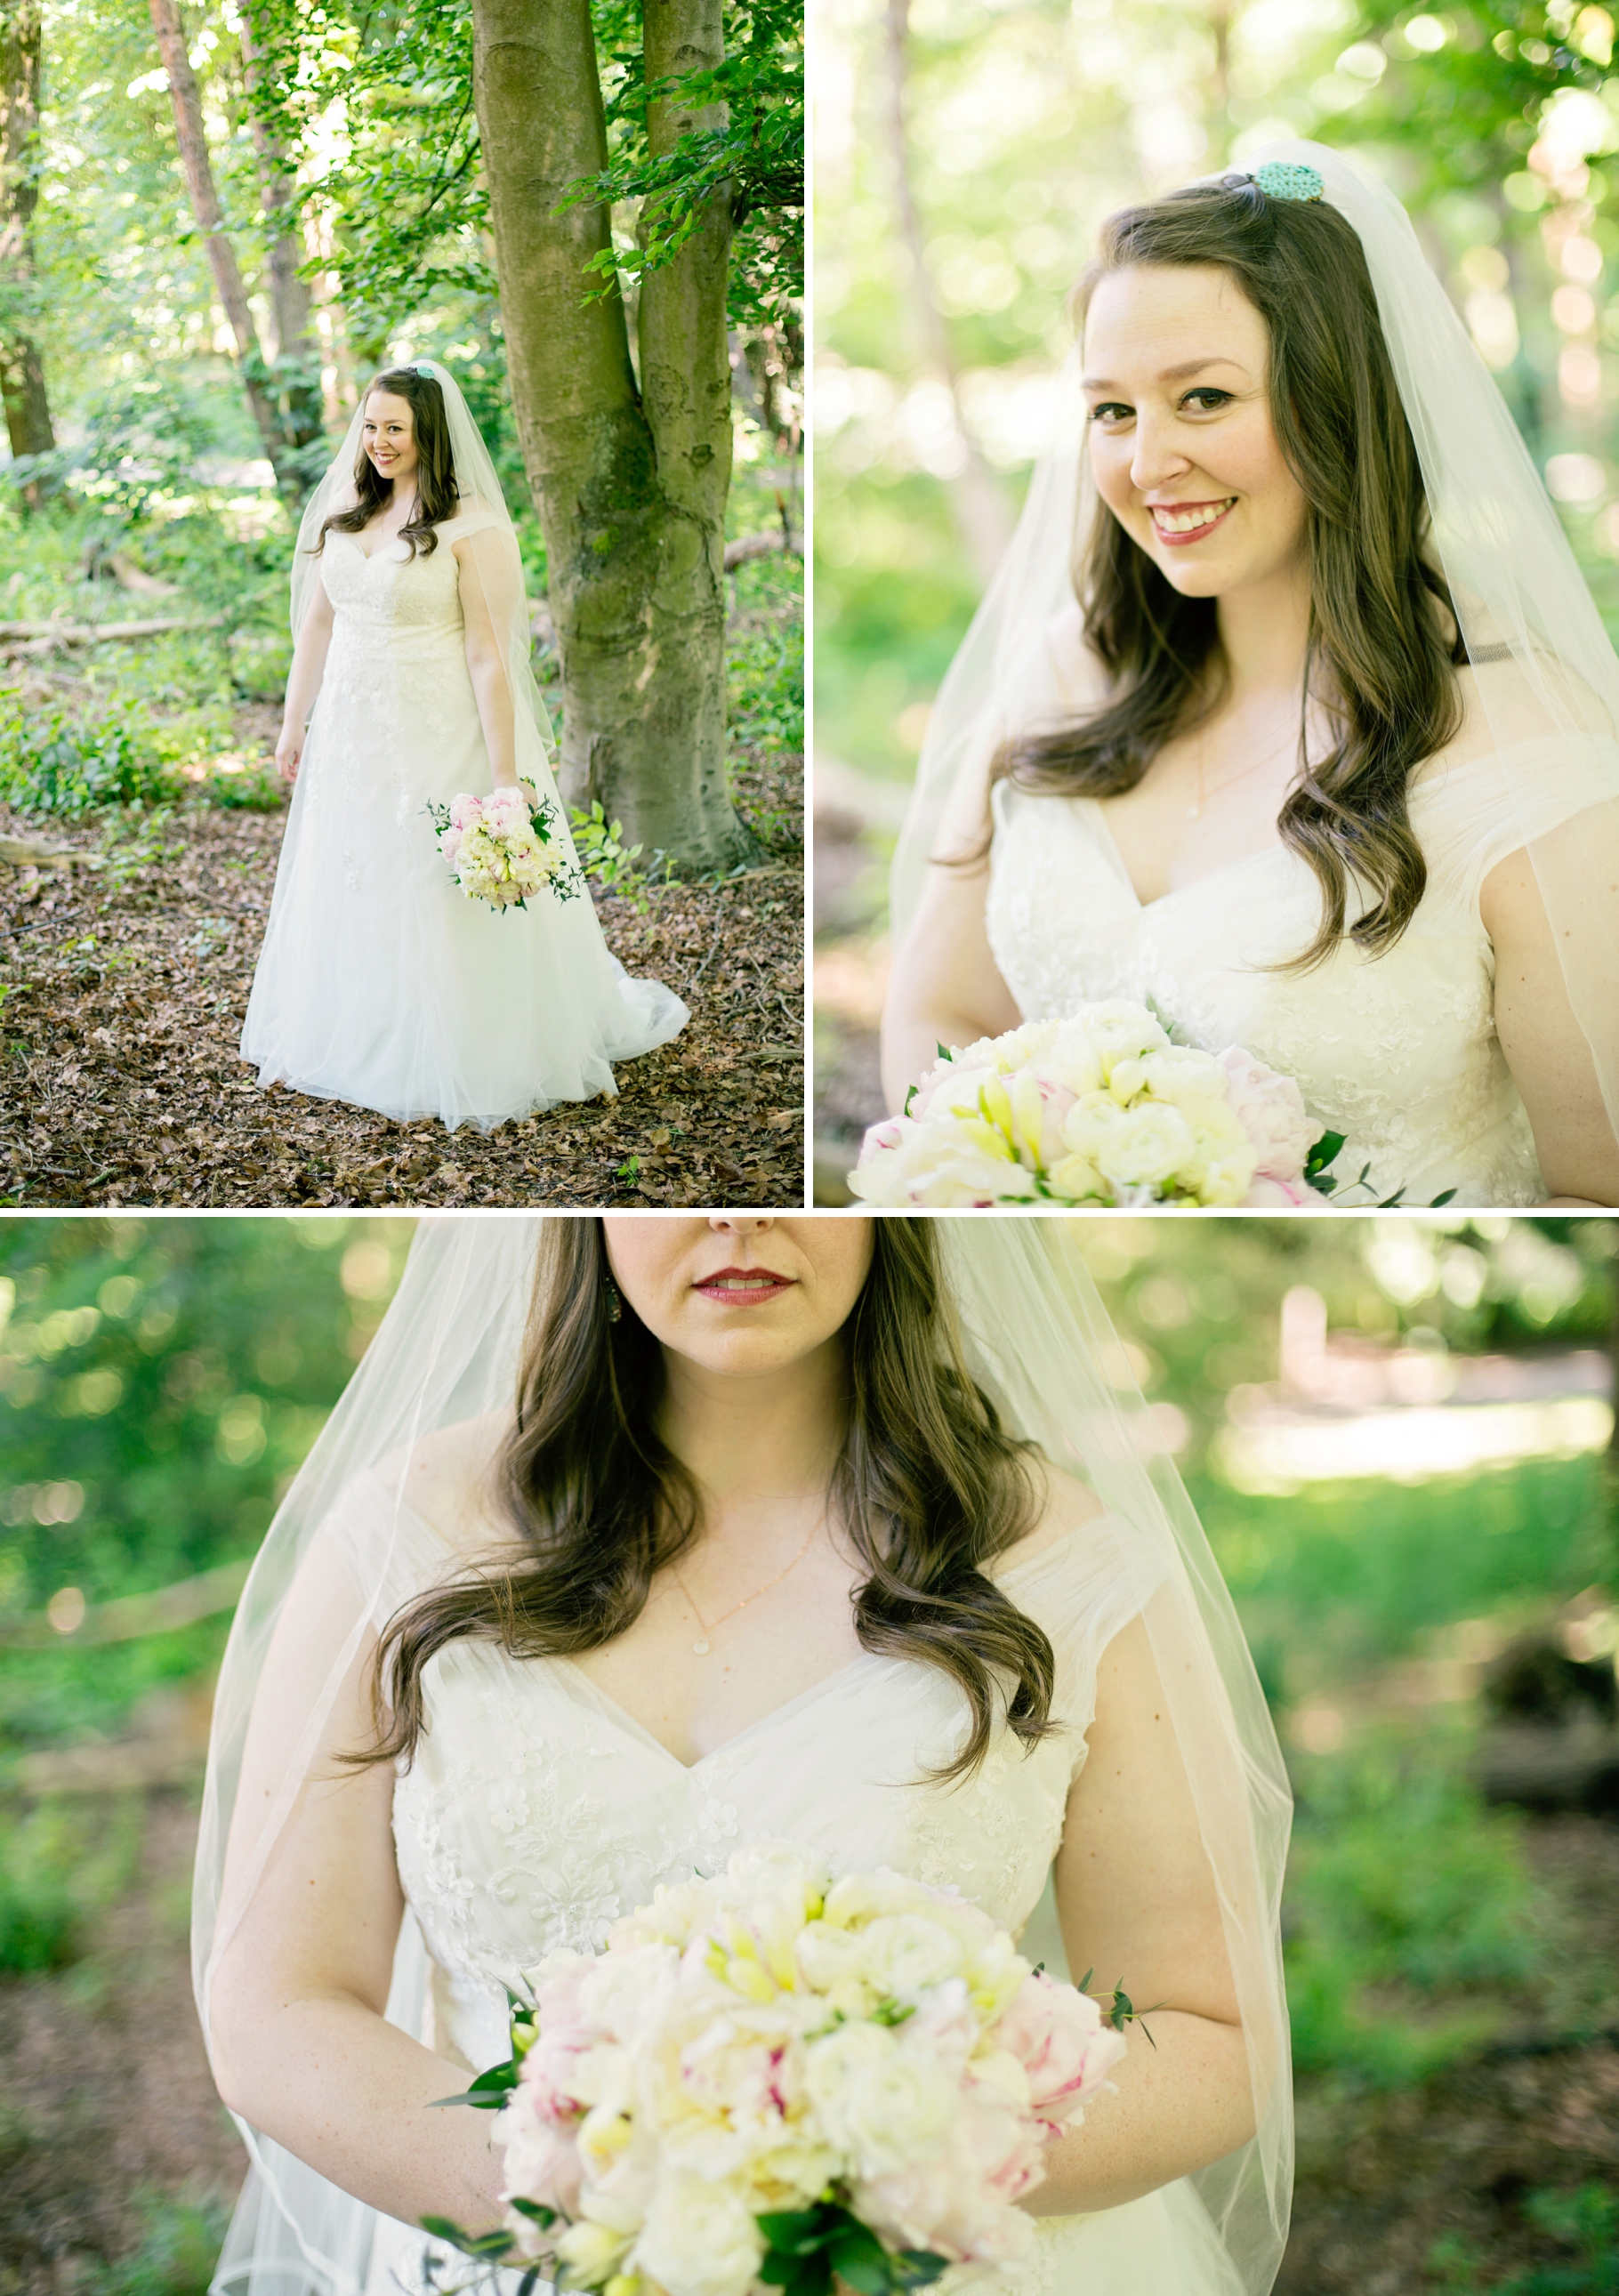 18-Bridal-Portraits-Bouquet-Flowers-Bride-Woodland-Park-Seattle-Wedding-Photographer-Photography-by-Betty-Elaine